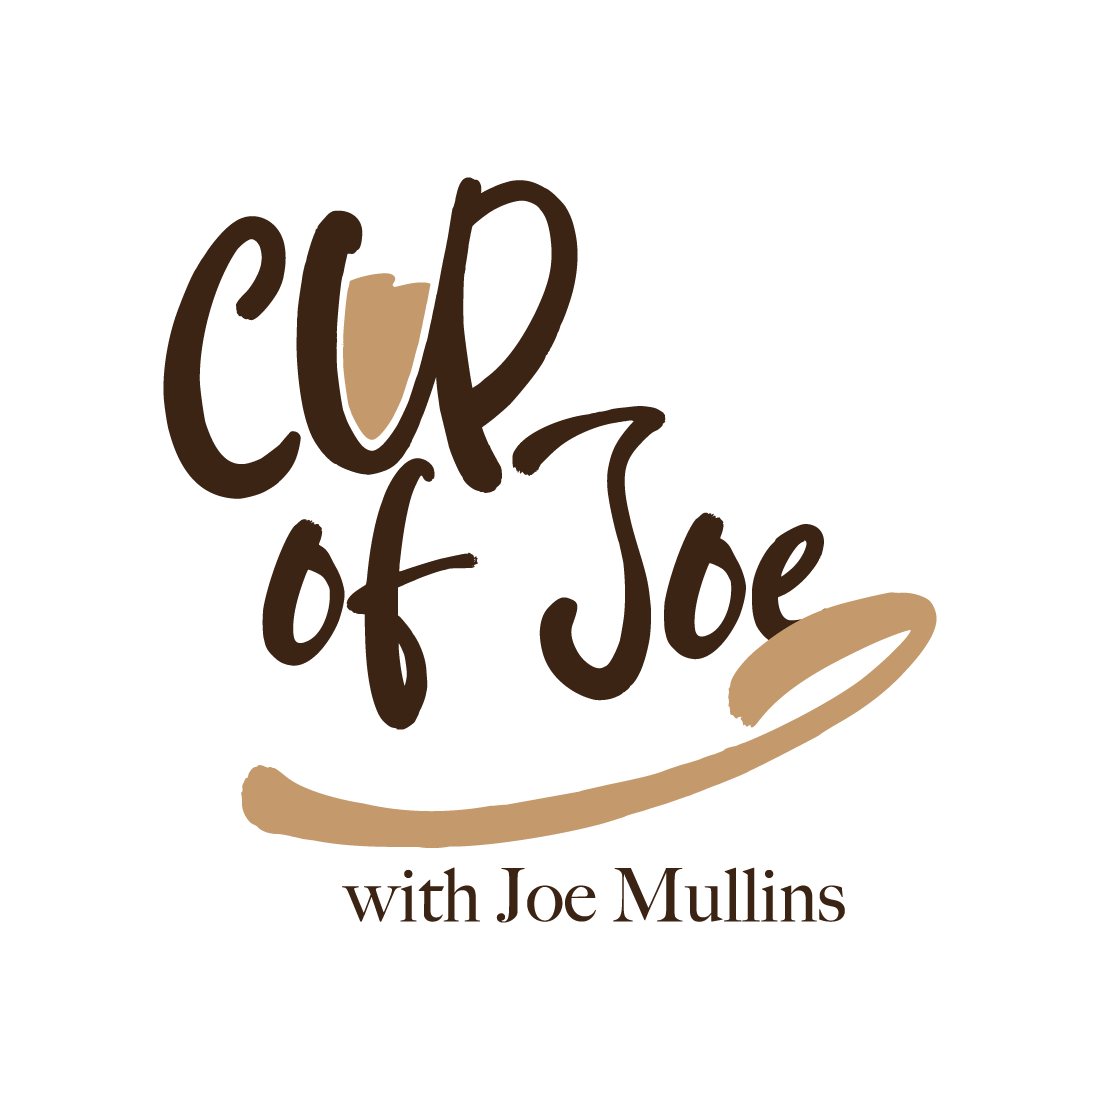 Cup Of Joe